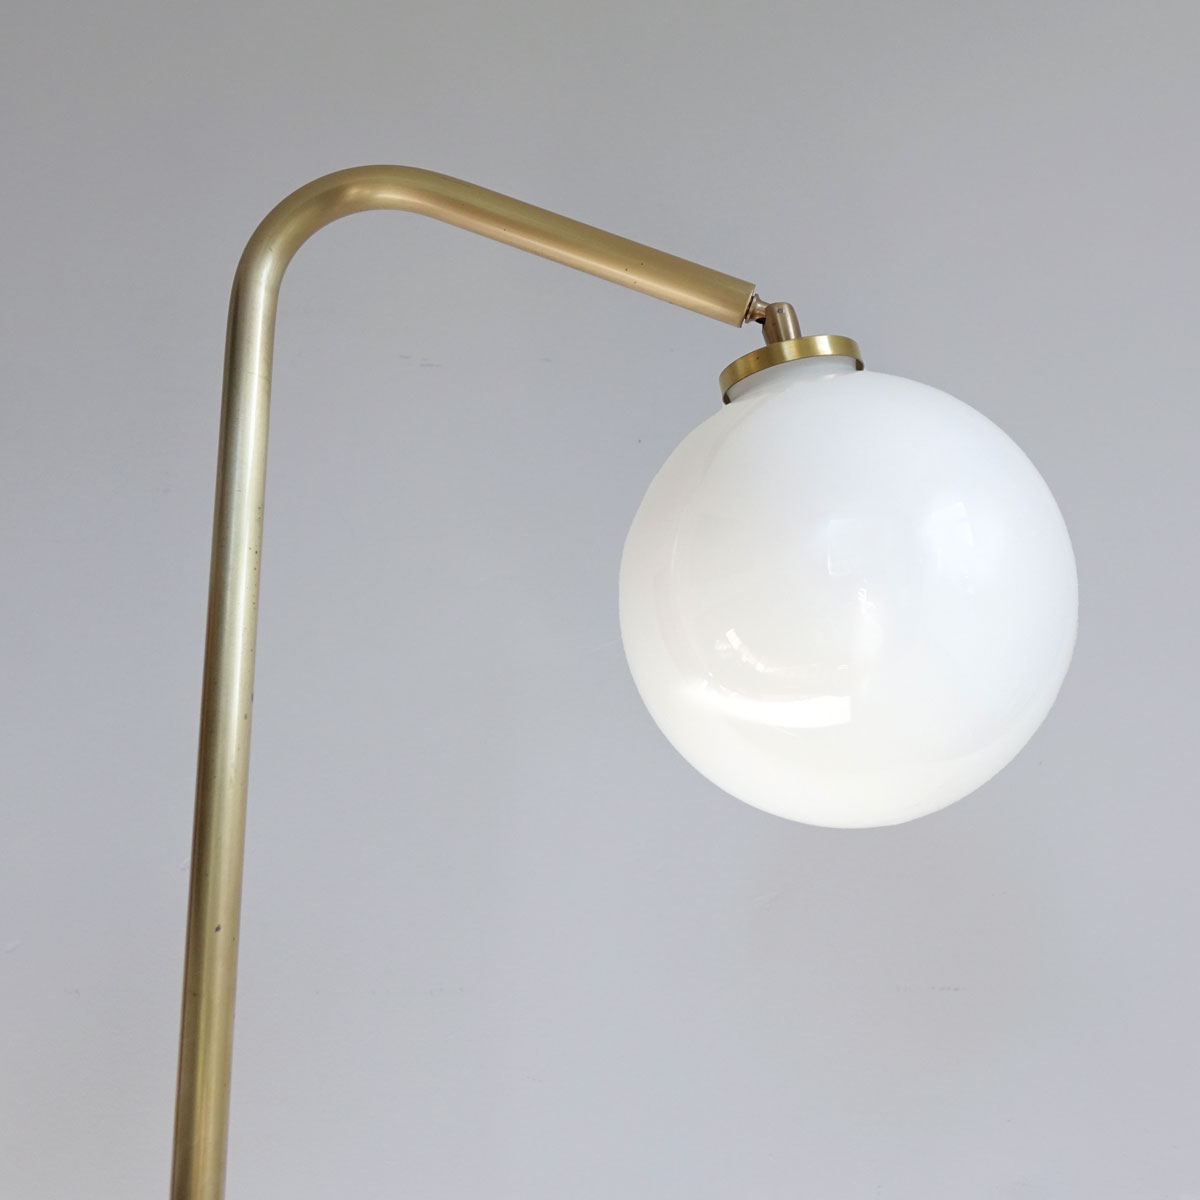 CTO Lighting Oscar Floor Lamp